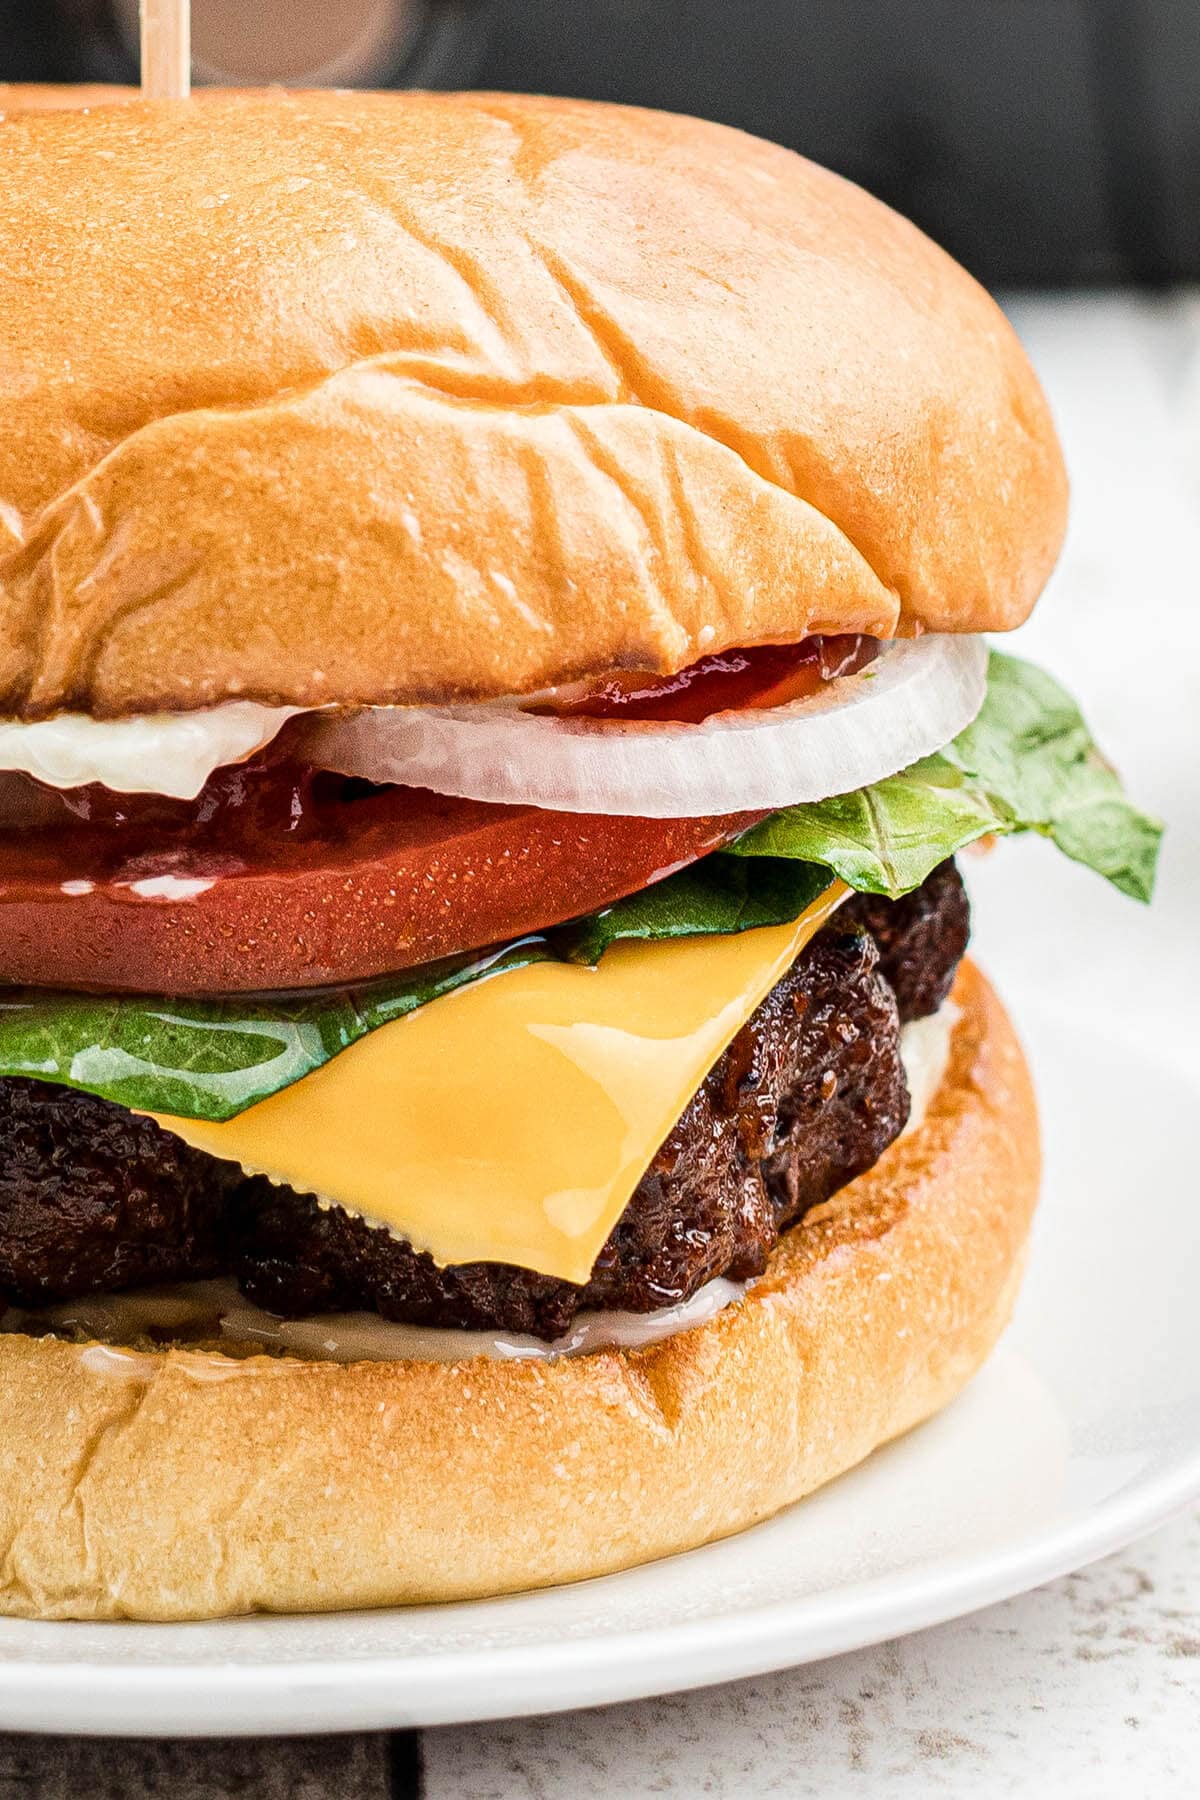 Cheeseburger on plate.